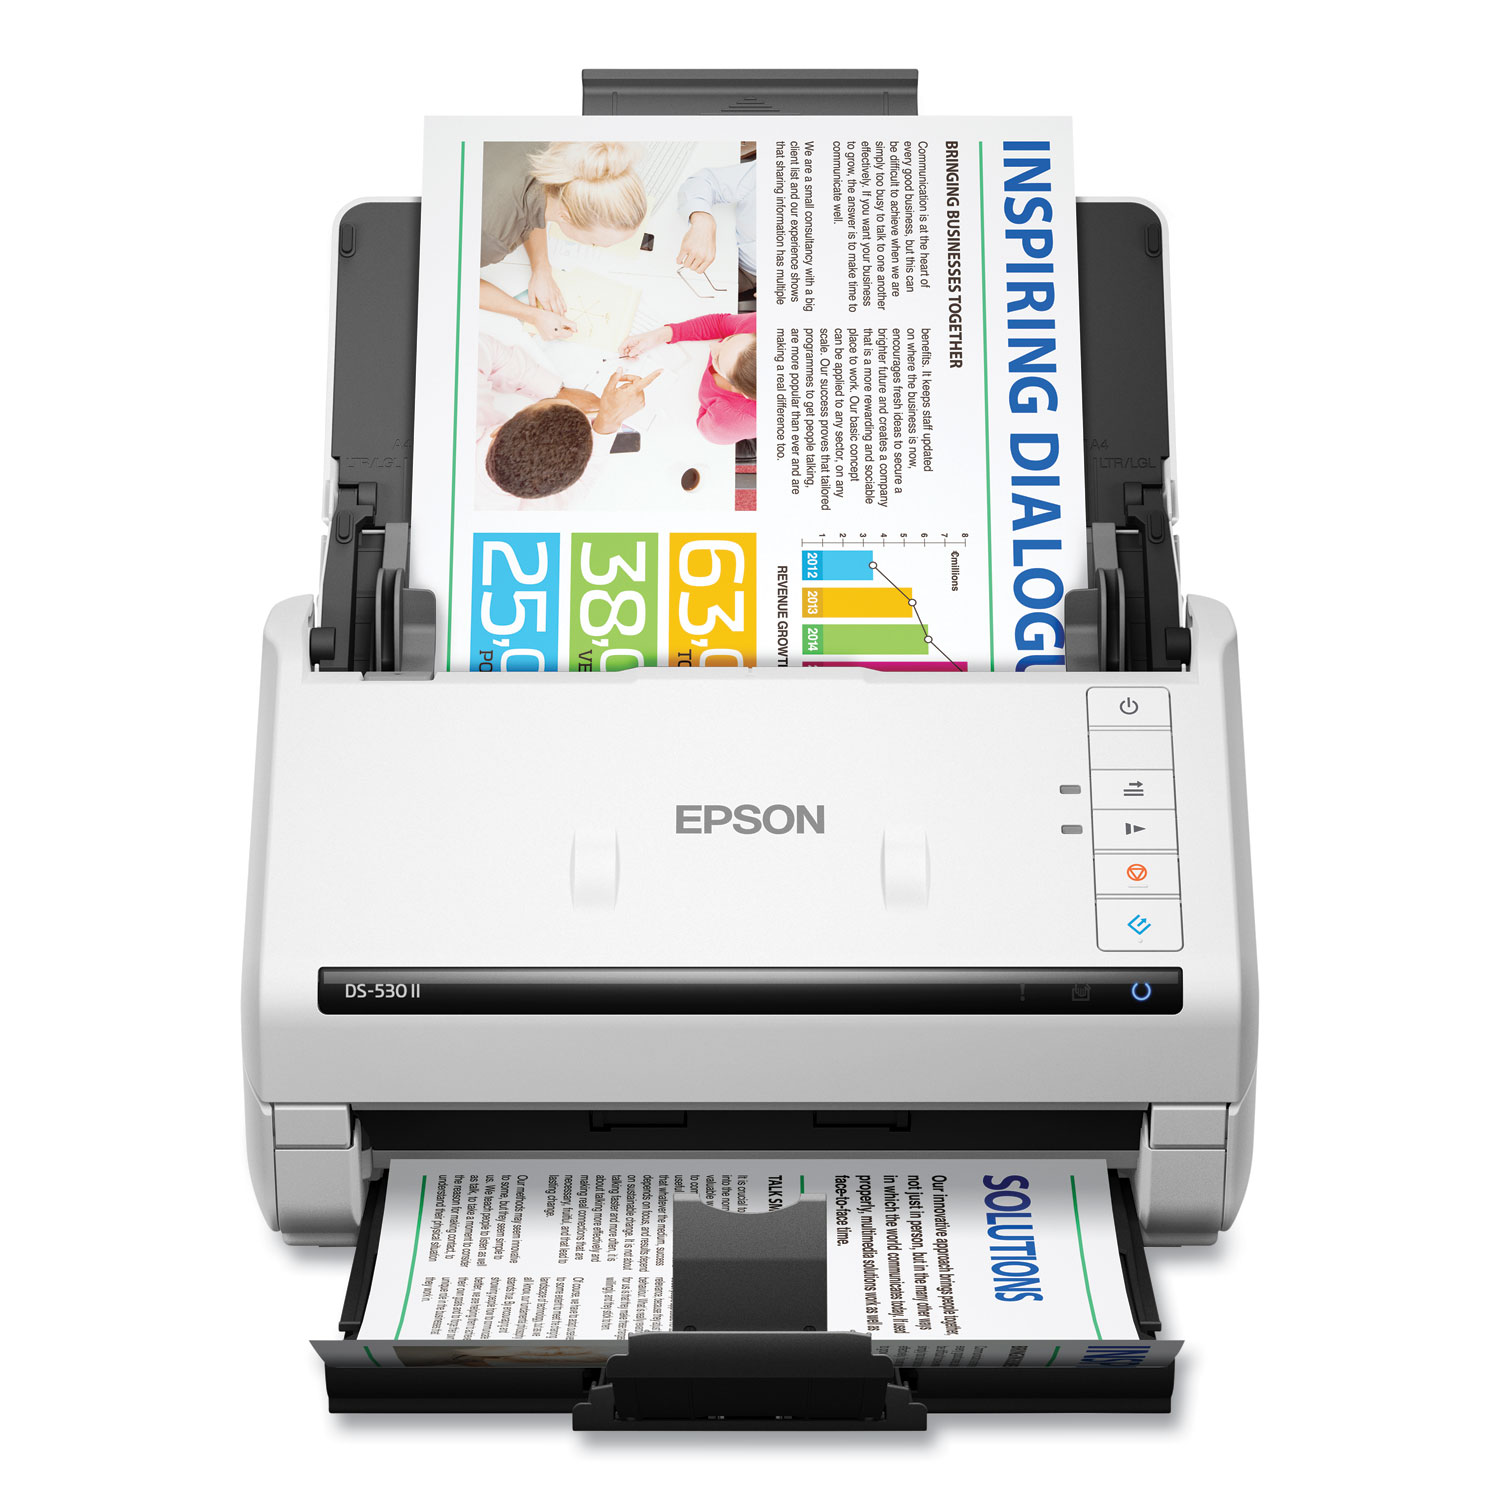 Epson® DS-530 II Color Duplex Document Scanner, 600 dpi Optical Resolution, 50-Sheet Duplex Auto Document Feeder